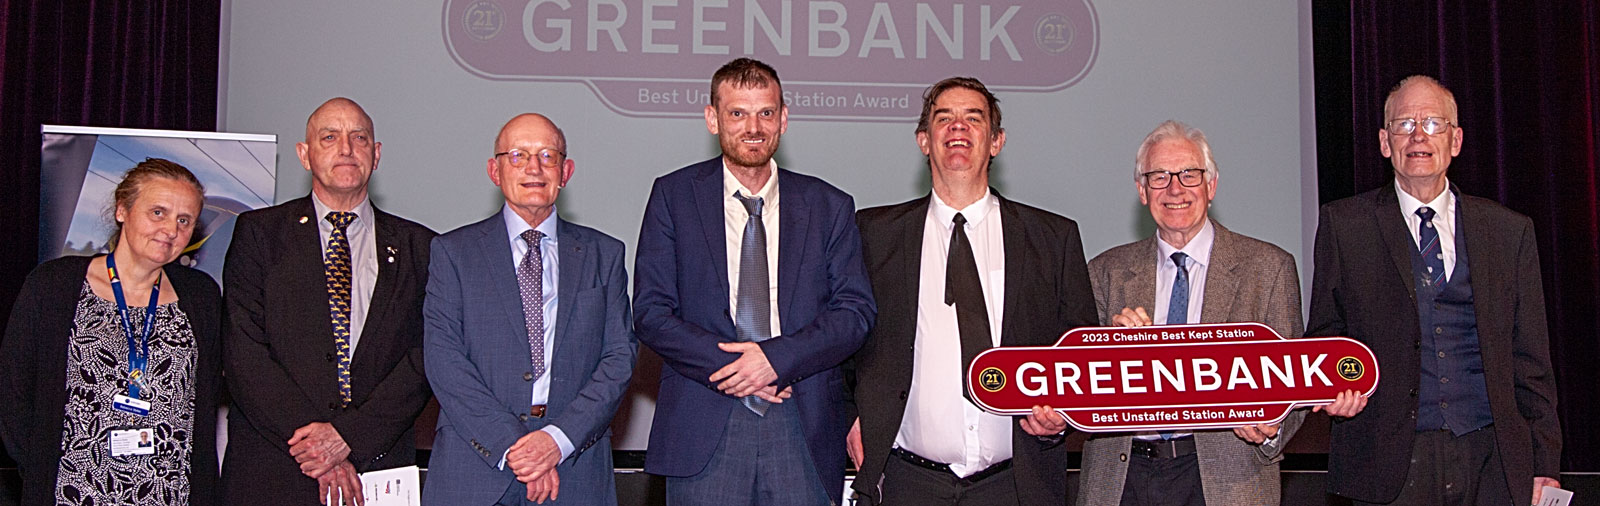 Greenbank---web